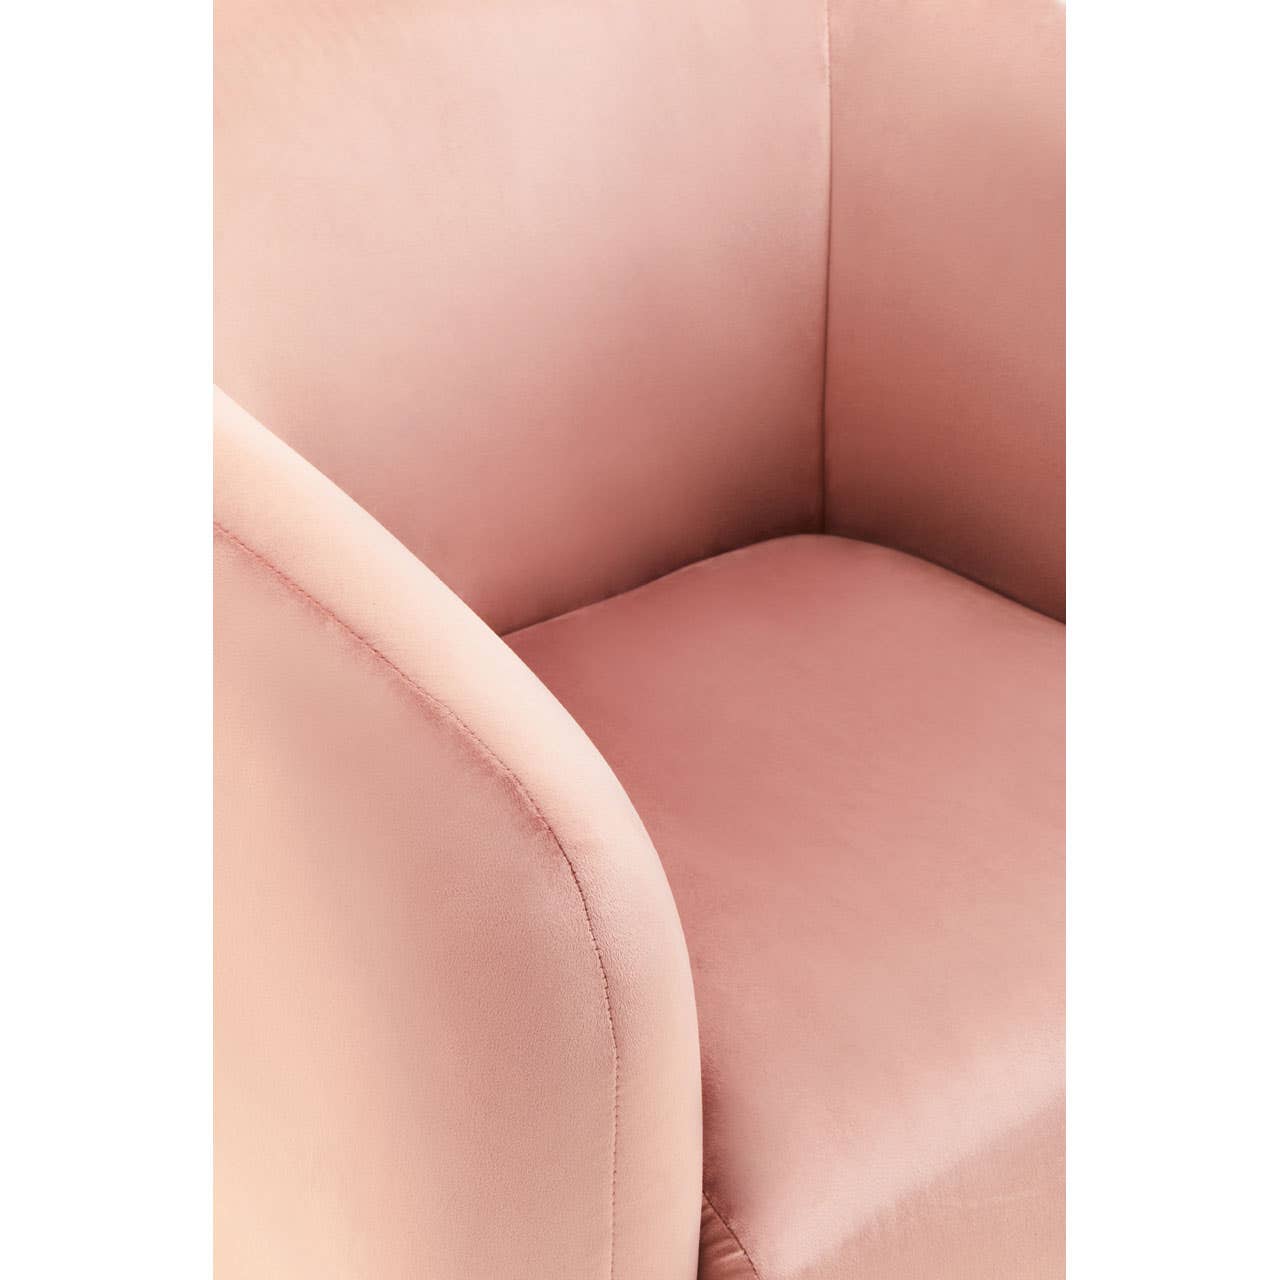 Noosa & Co. Living Yasmeen Pink Velvet Armchair House of Isabella UK